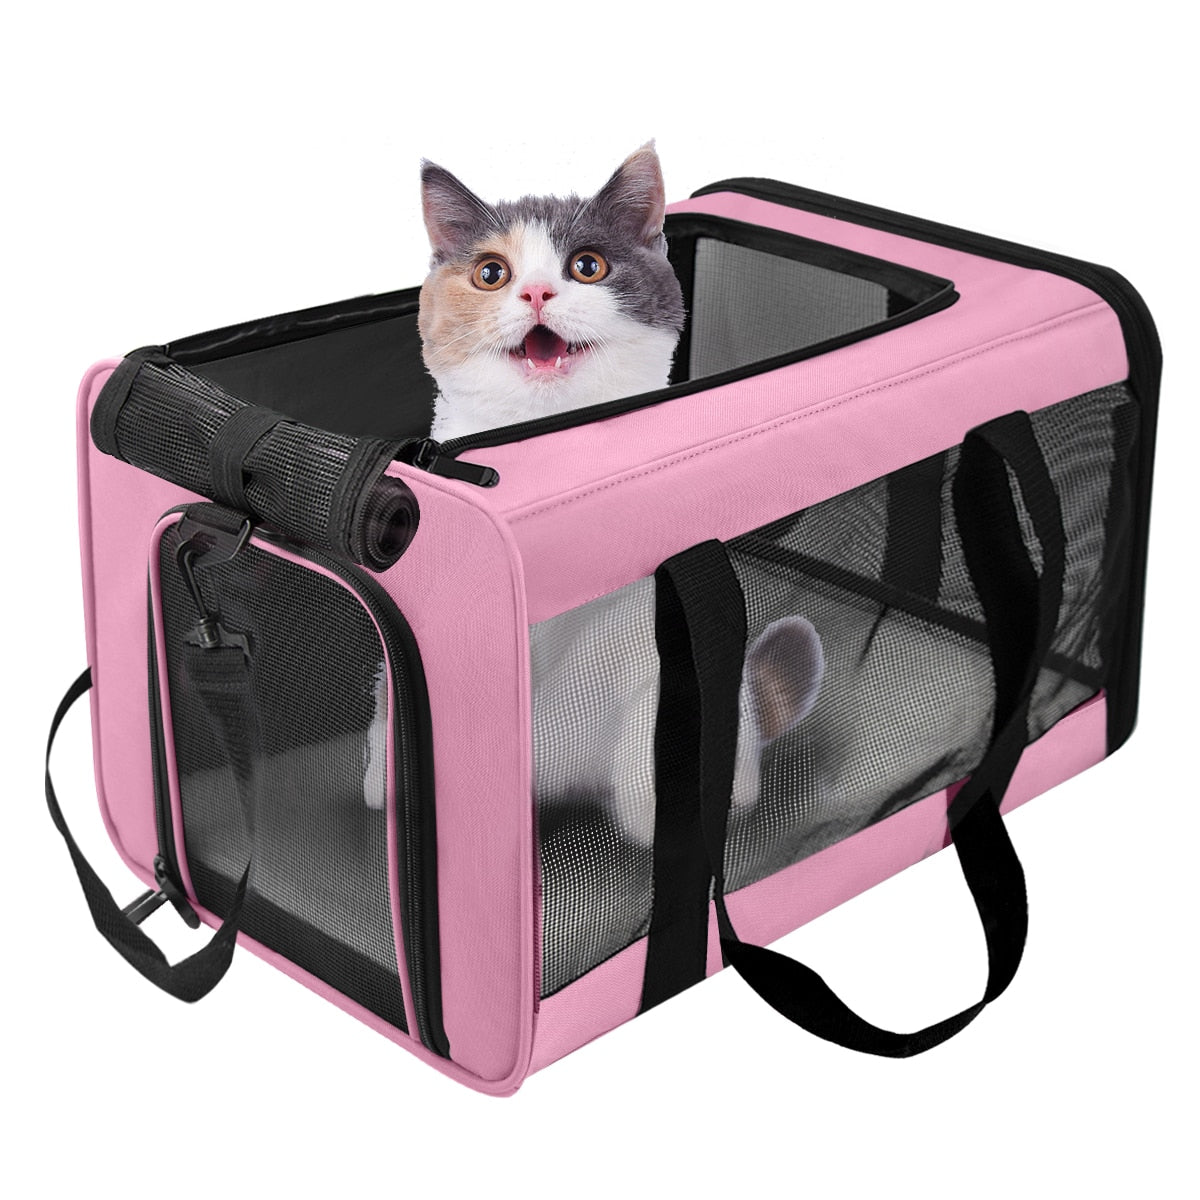 Cat Backpack Carrier Portable Transport Bag Soft Sided Airline Approved Pet Travel Carrier For Cats Reflective Tapes Handbag